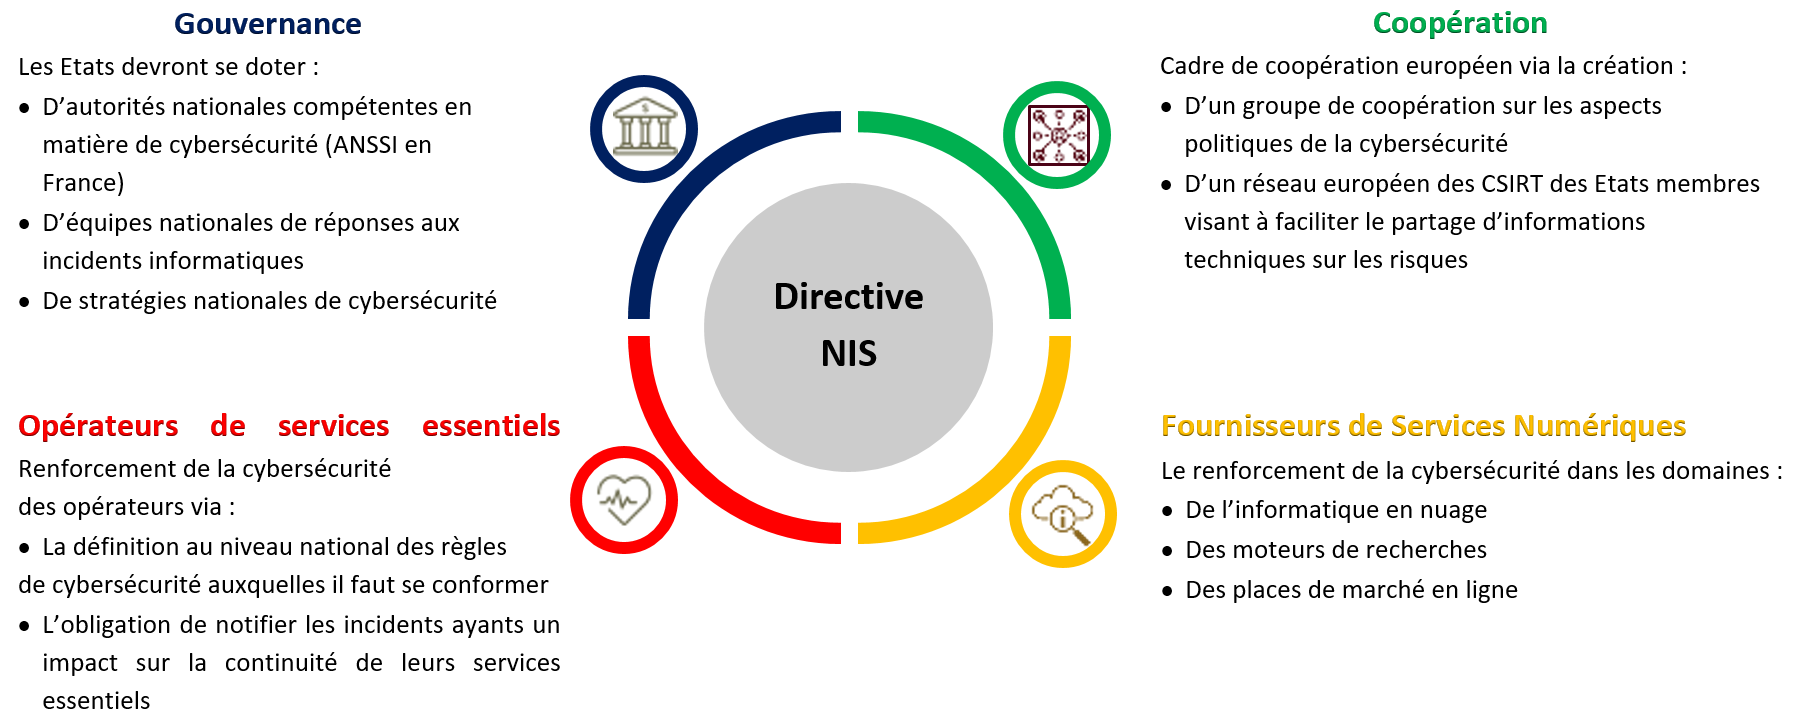 Directive NIS - 4 enjeux